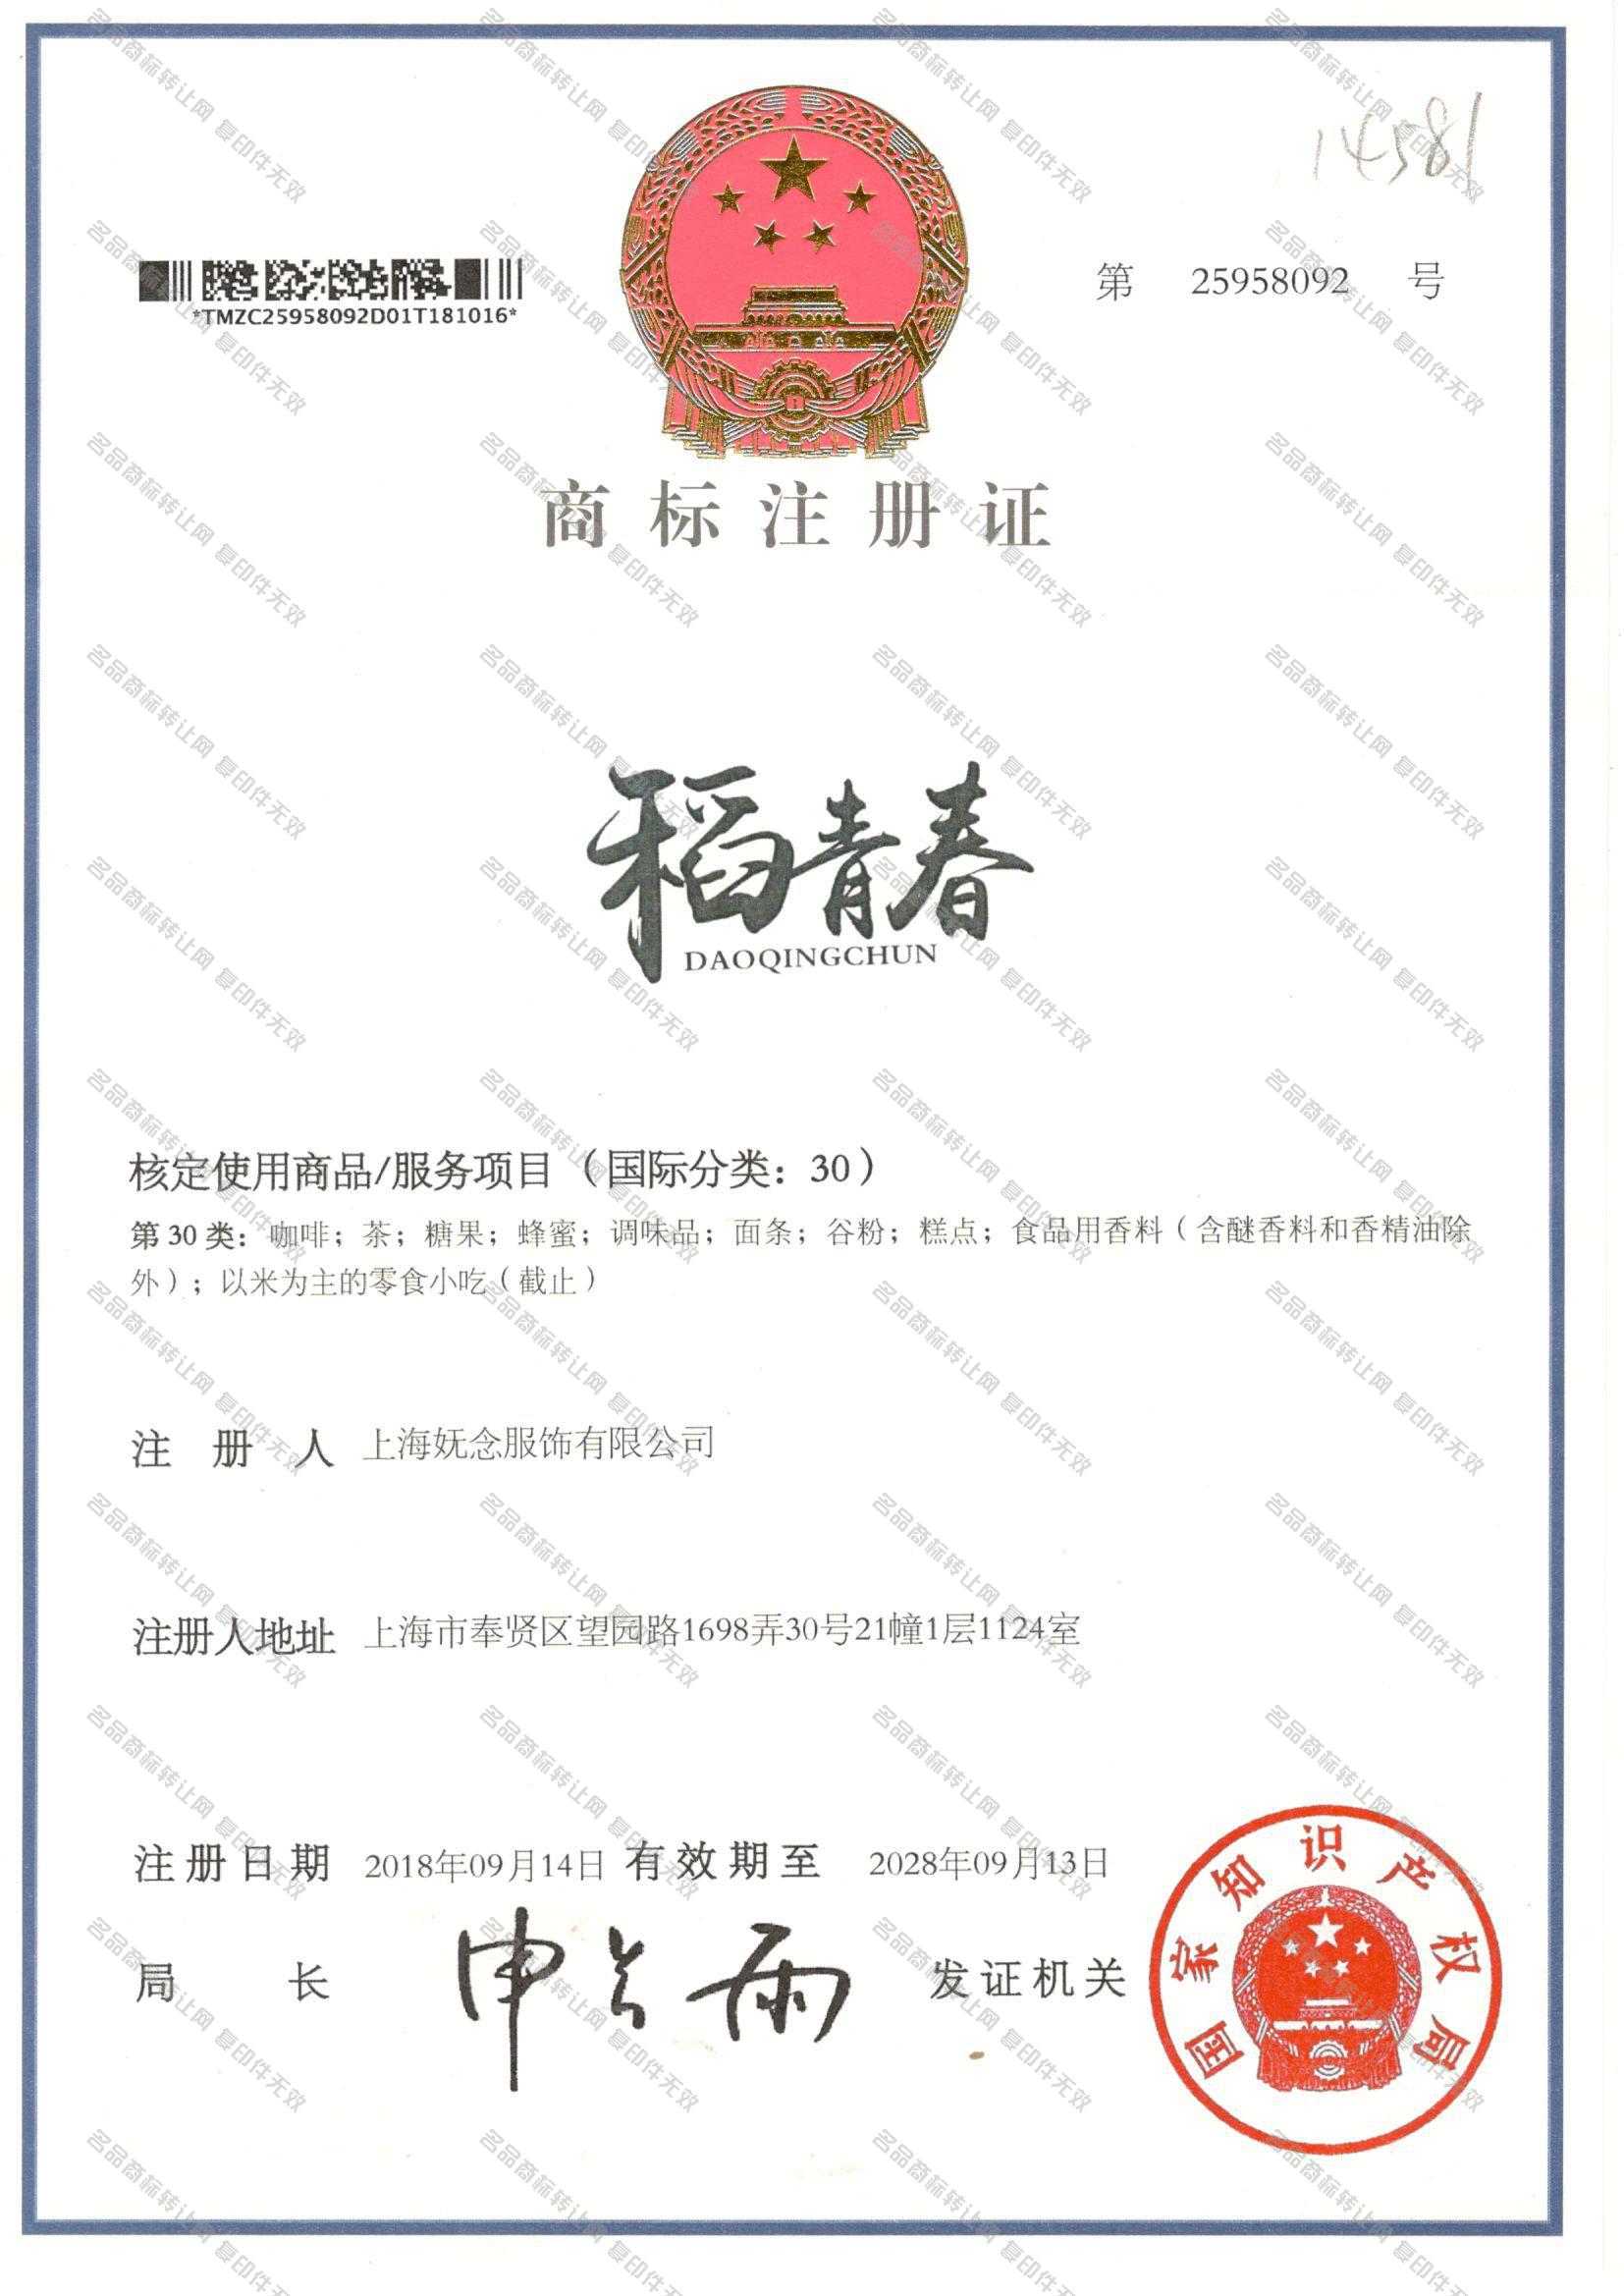 稻青春 DAOQINGCHUN注册证